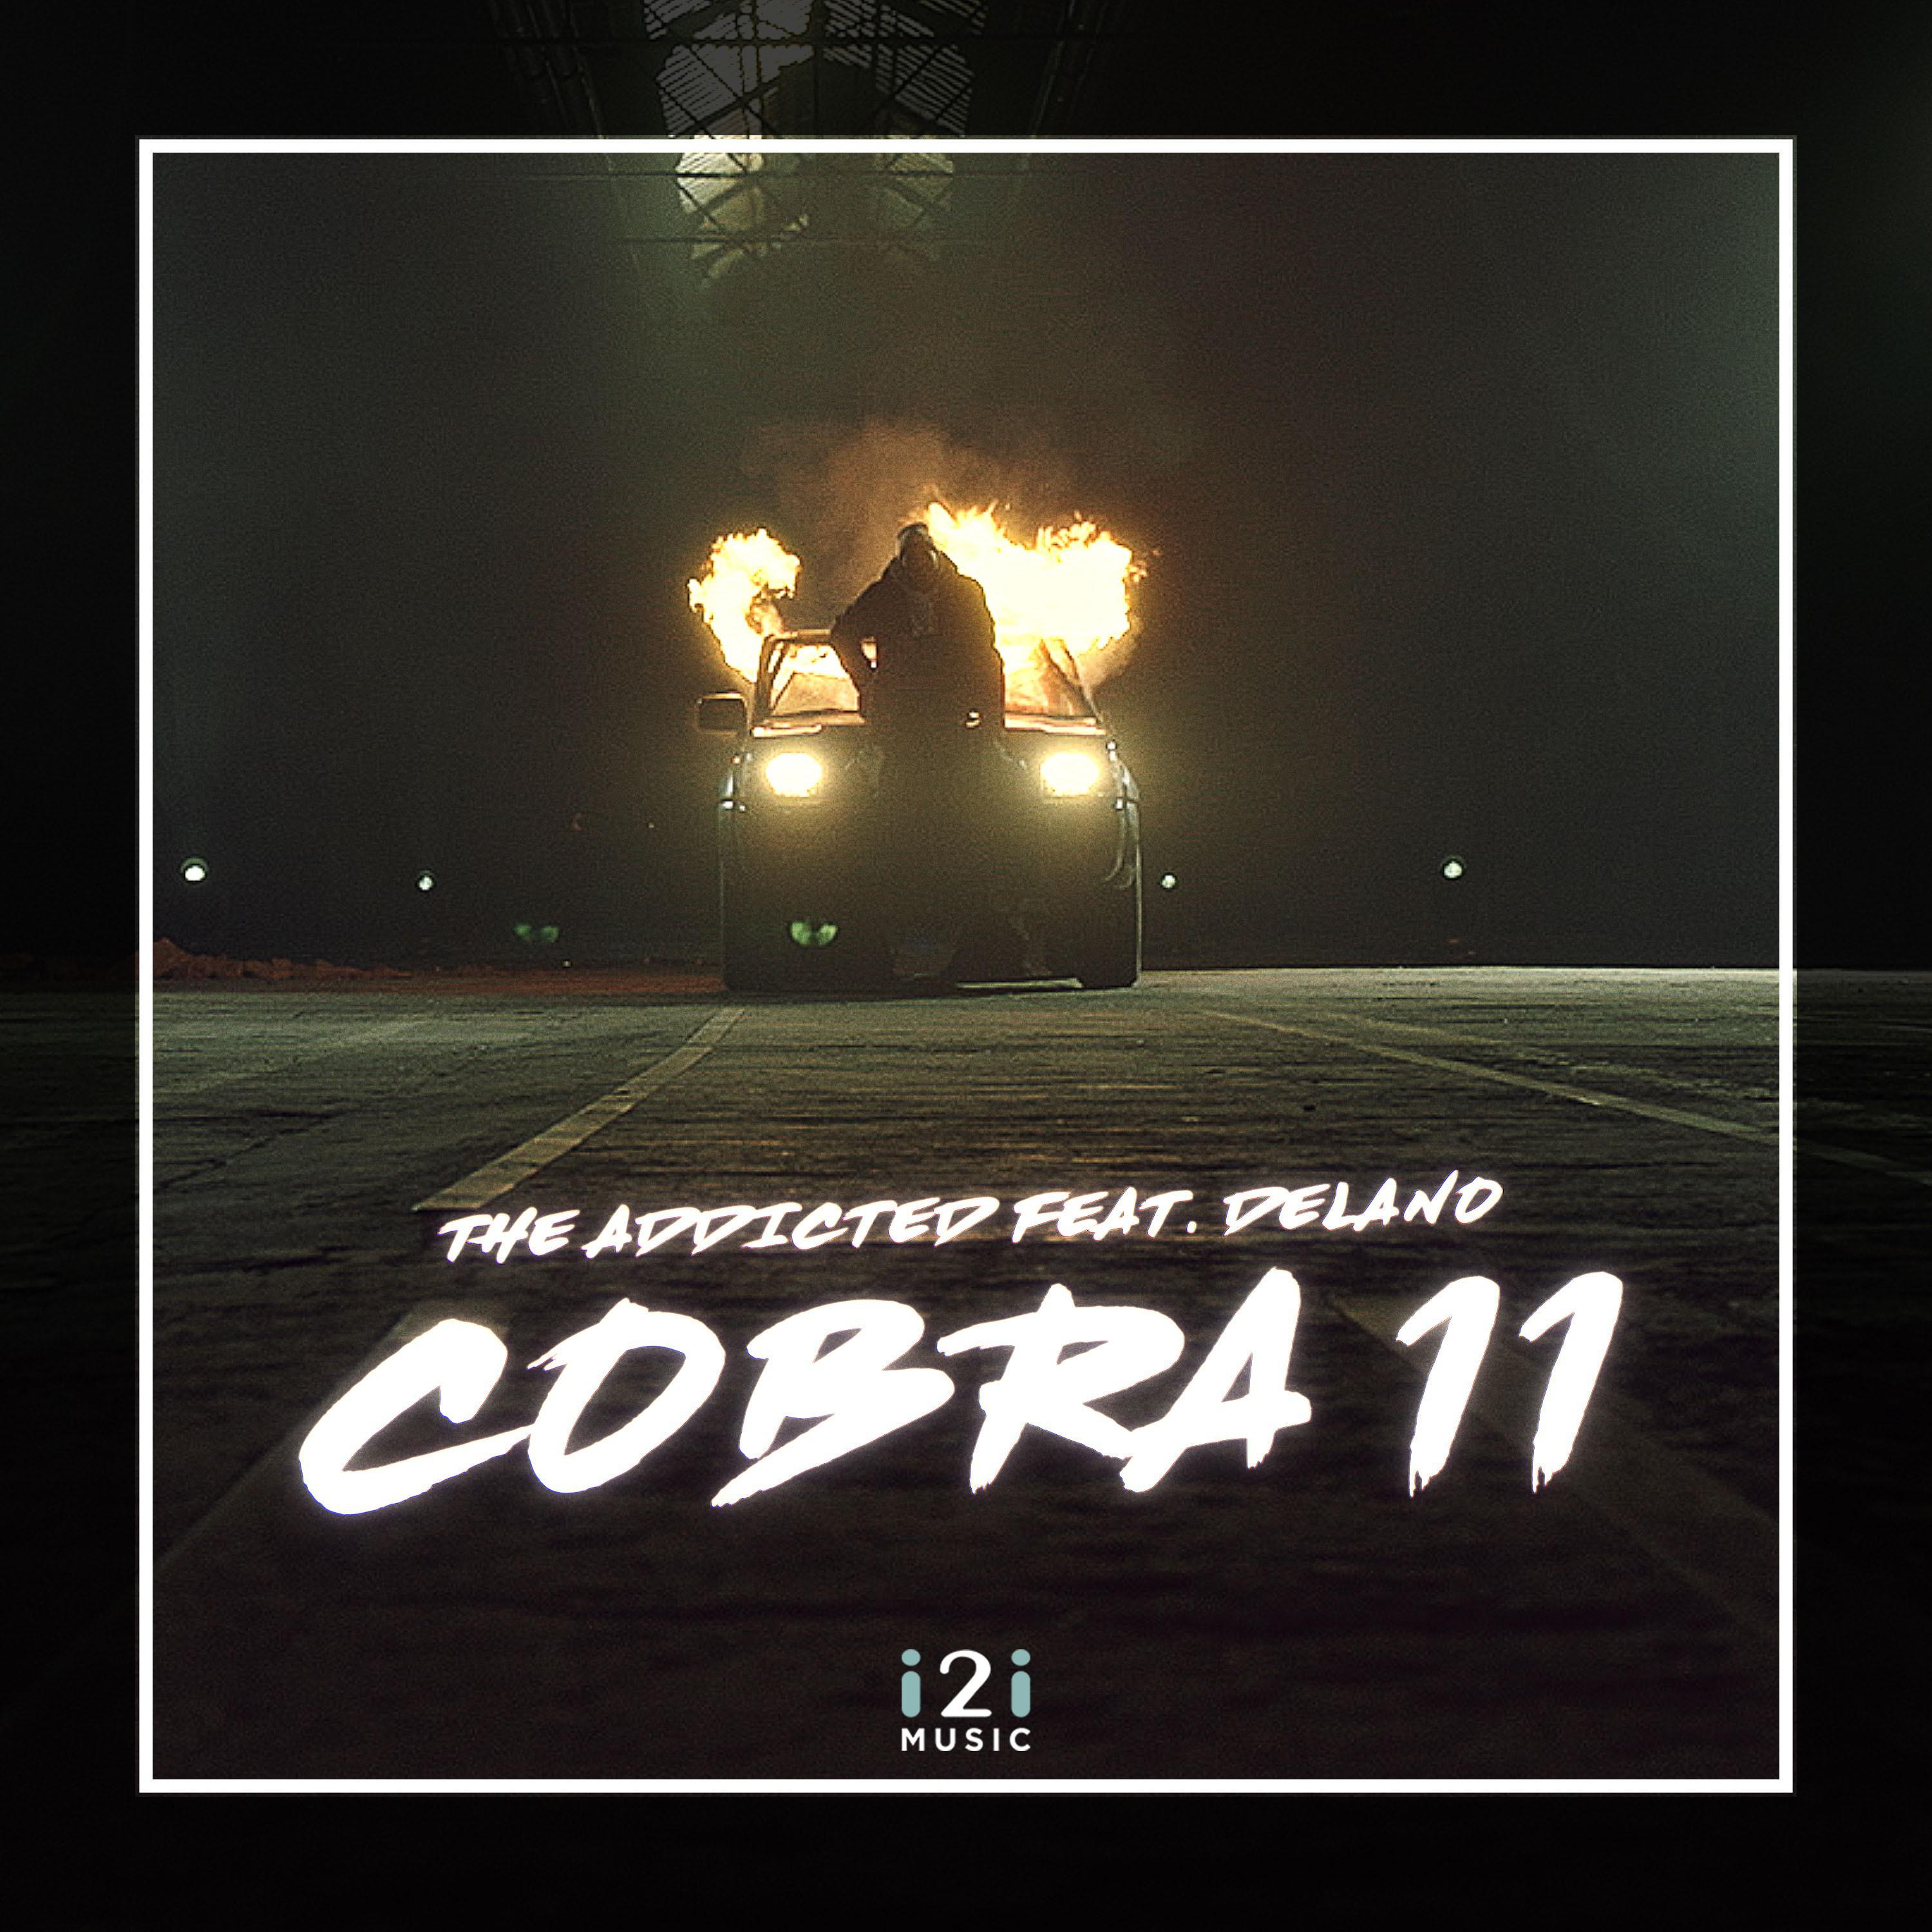 Cobra 11